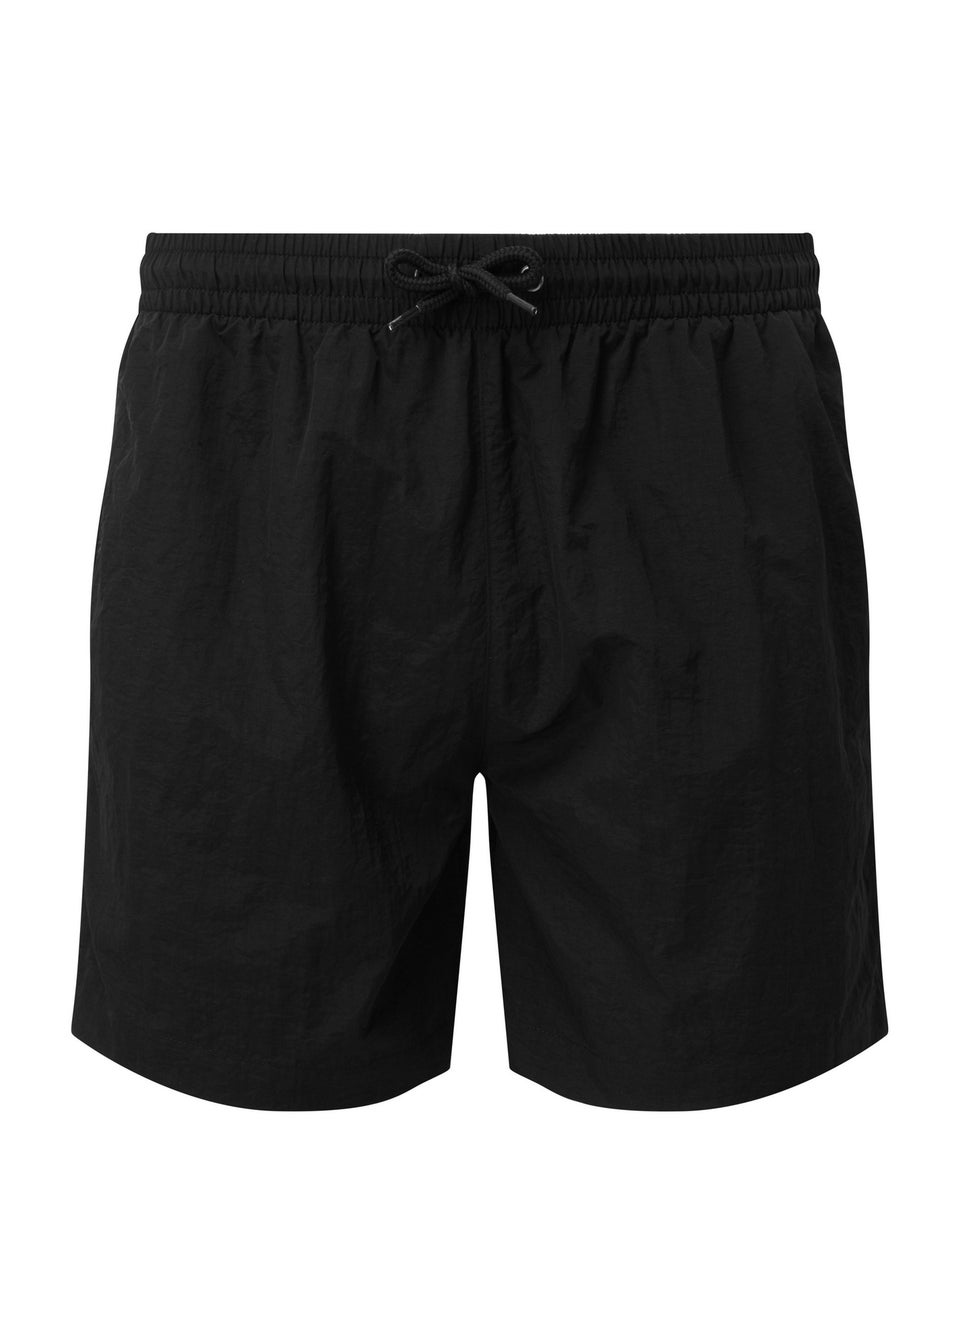 Asquith & Fox Black/Black Swim Shorts